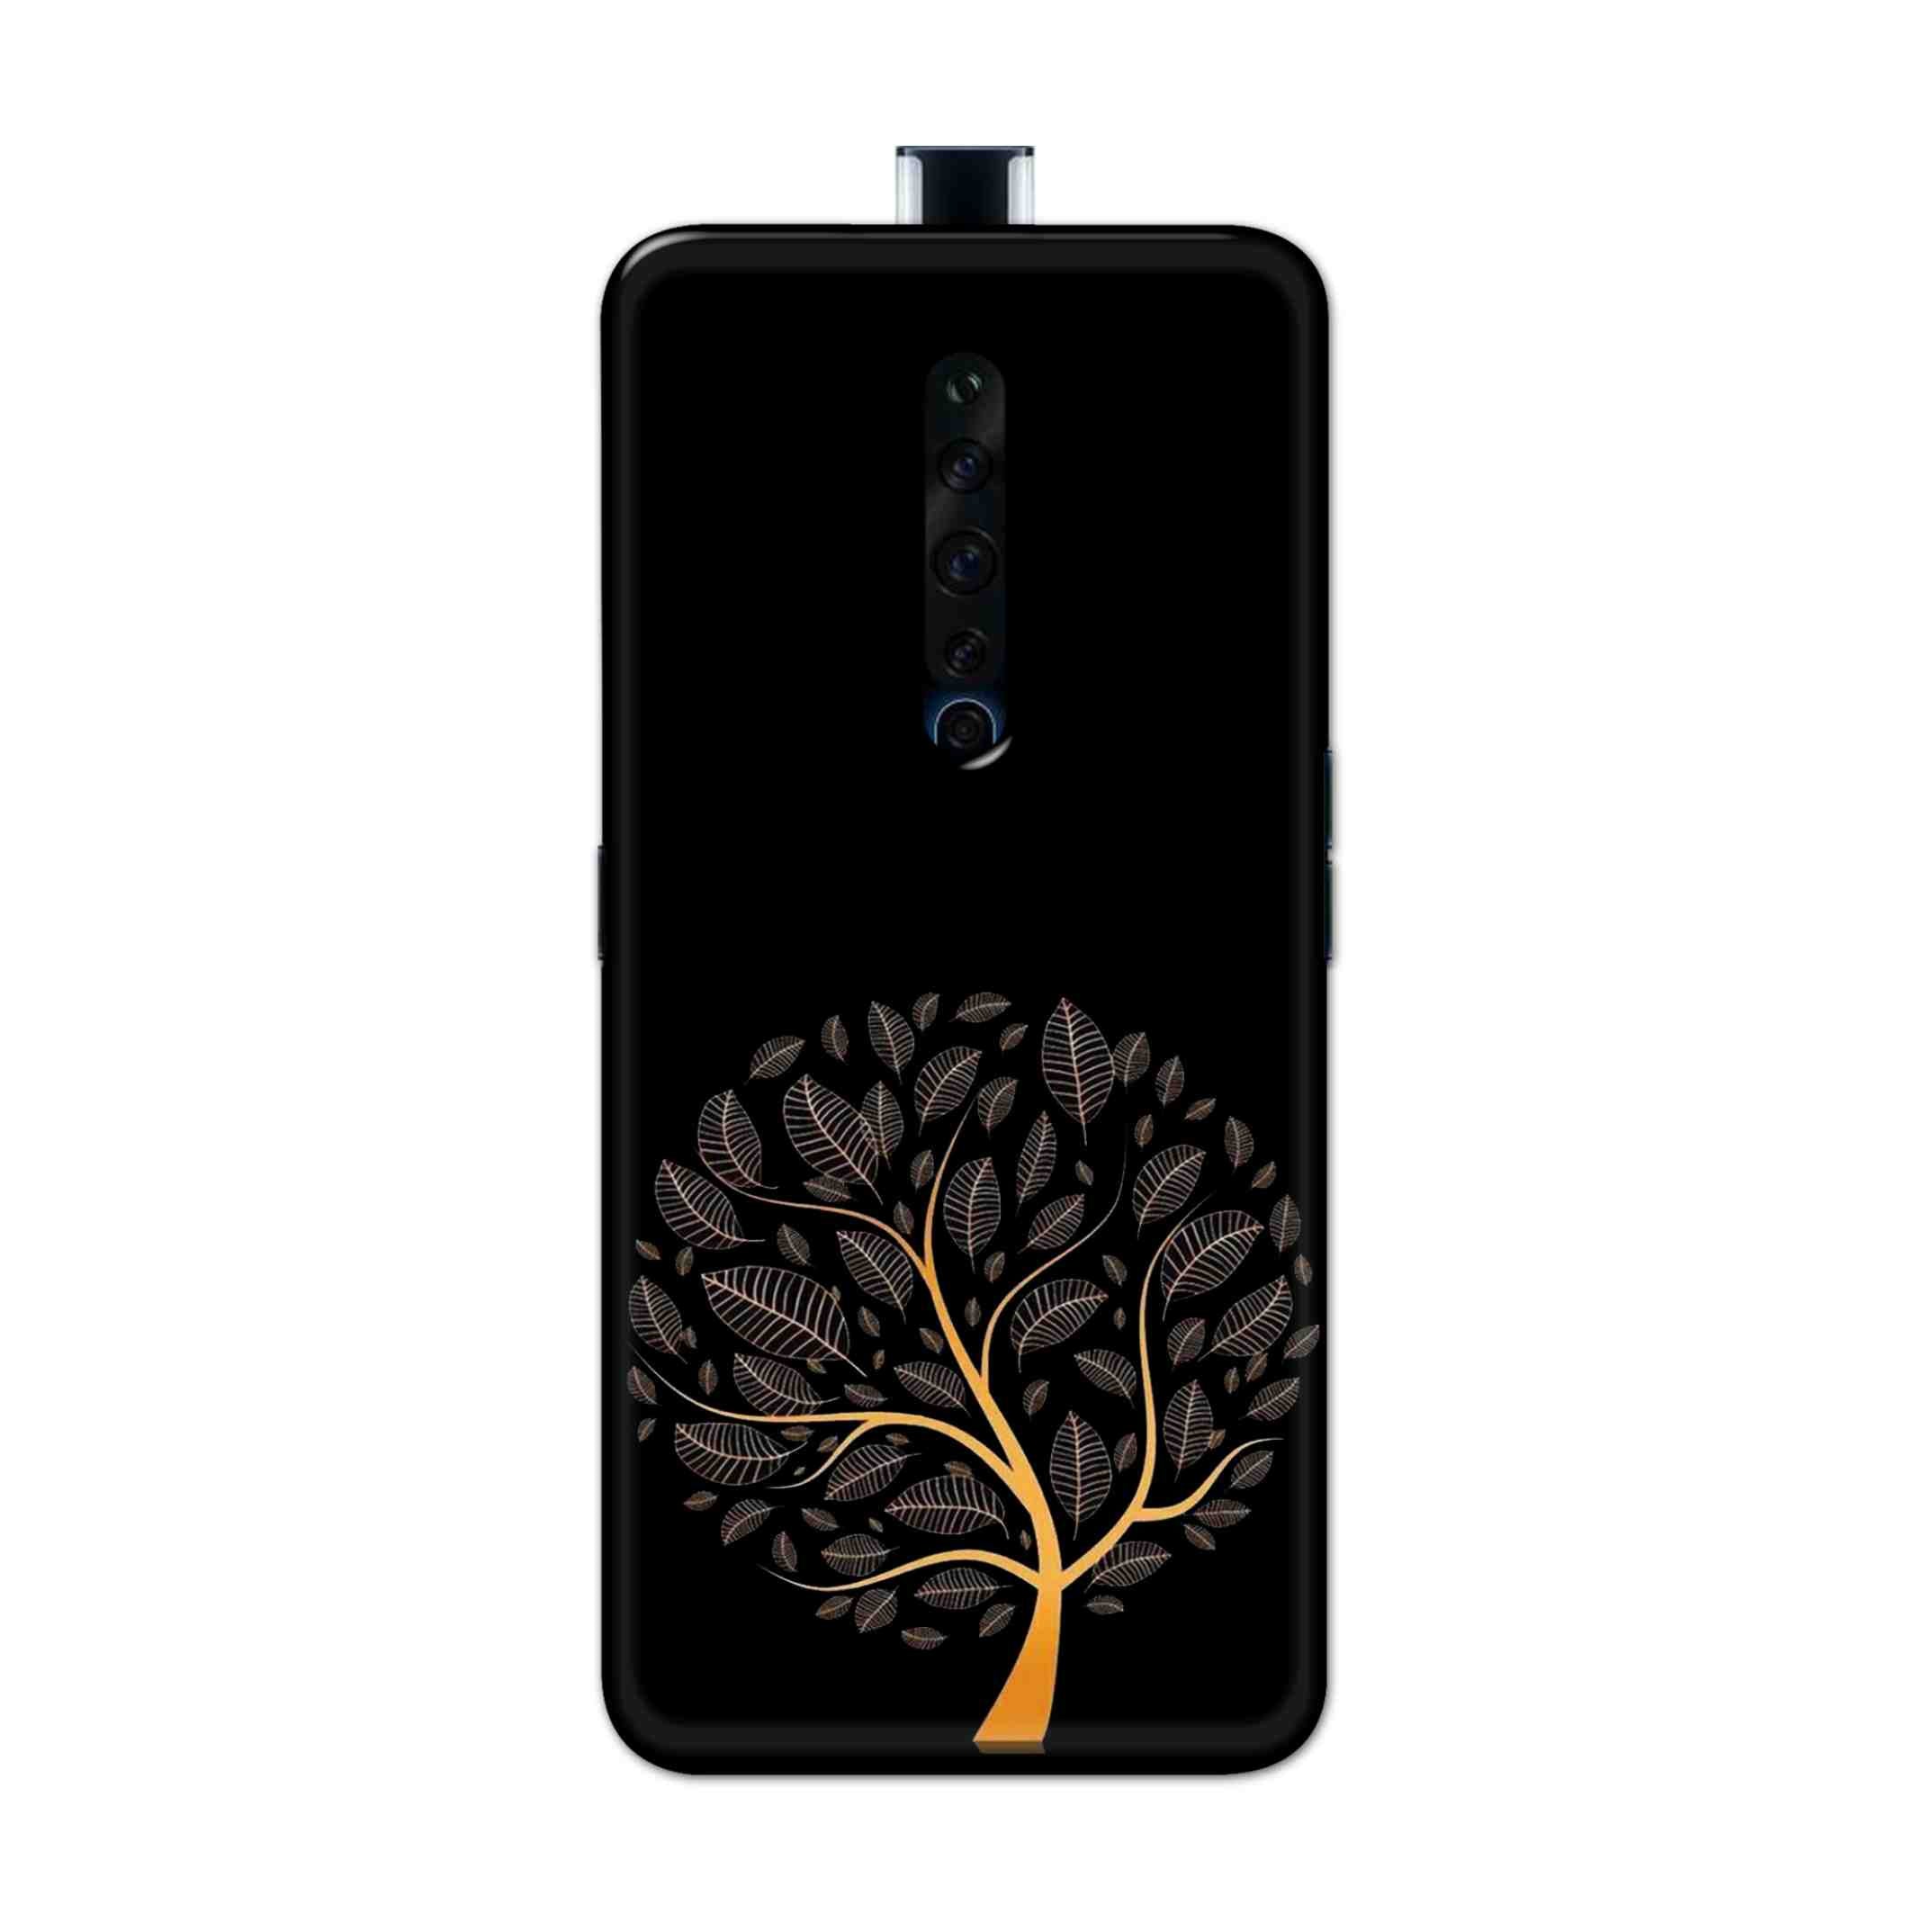 Buy Golden Tree Hard Back Mobile Phone Case Cover For Oppo Reno 2Z Online